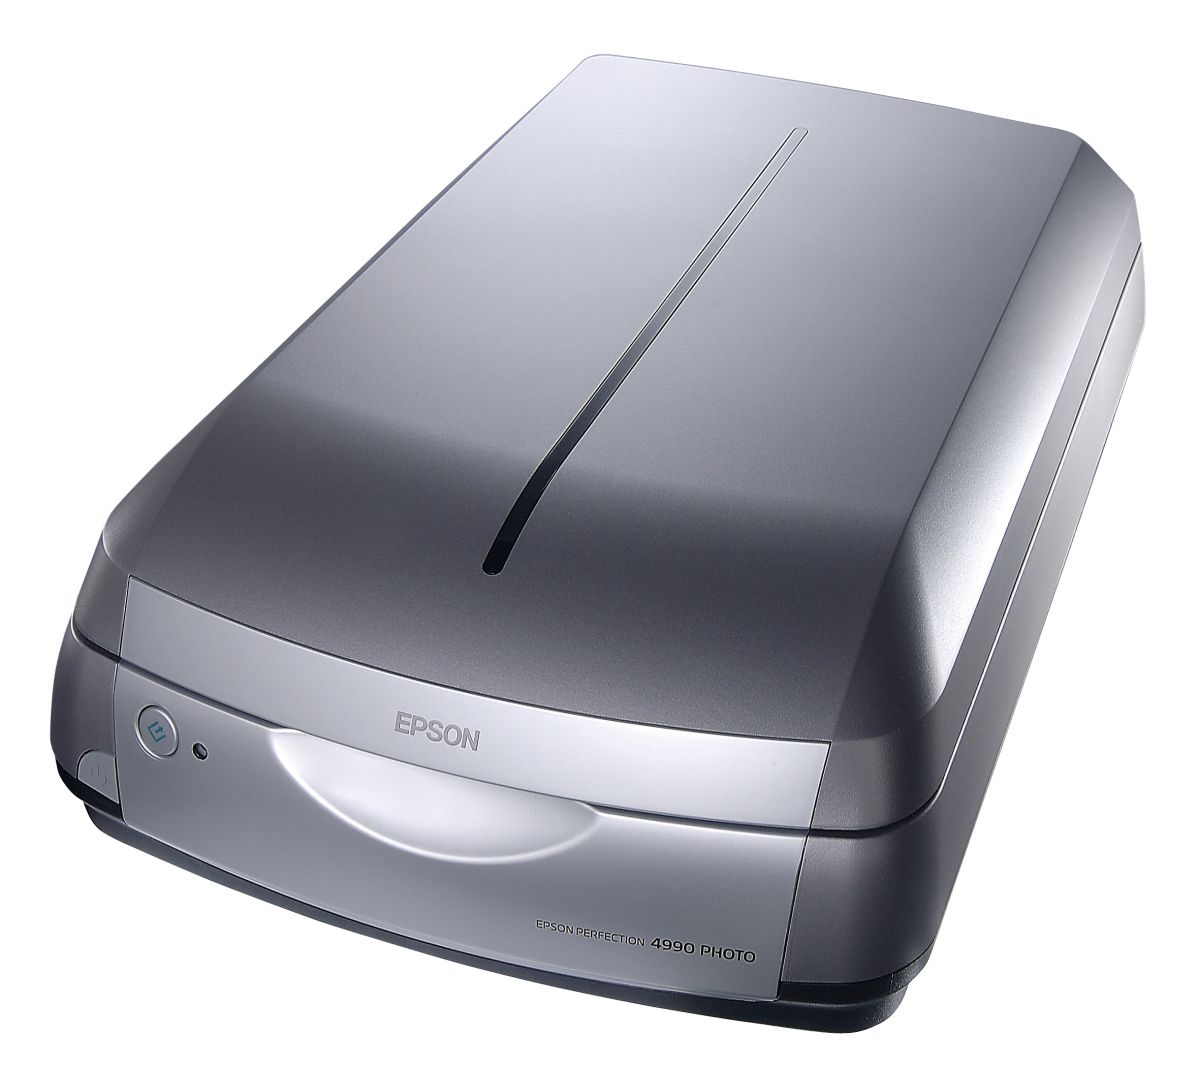 Epson scanner software download, free